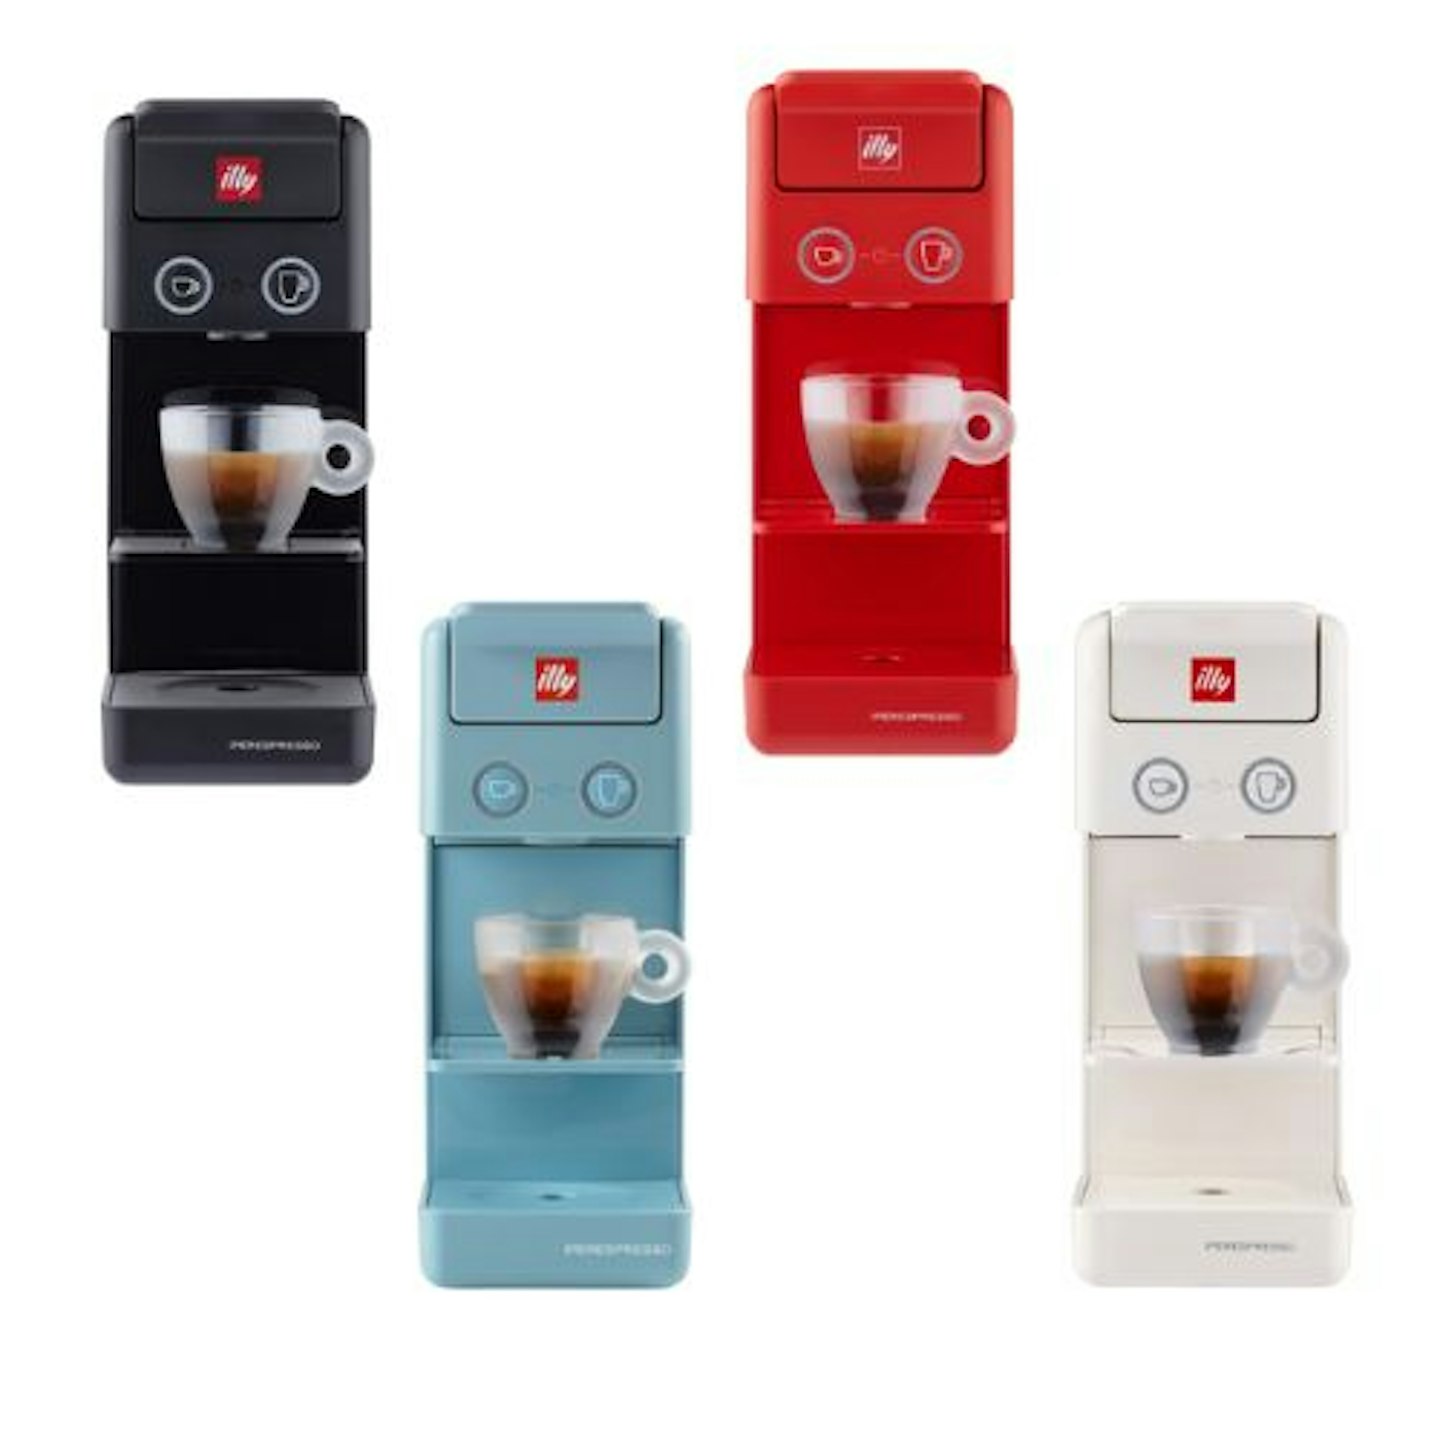 Illy - Espresso & Coffee Machine - Y3.3 iperEspresso White